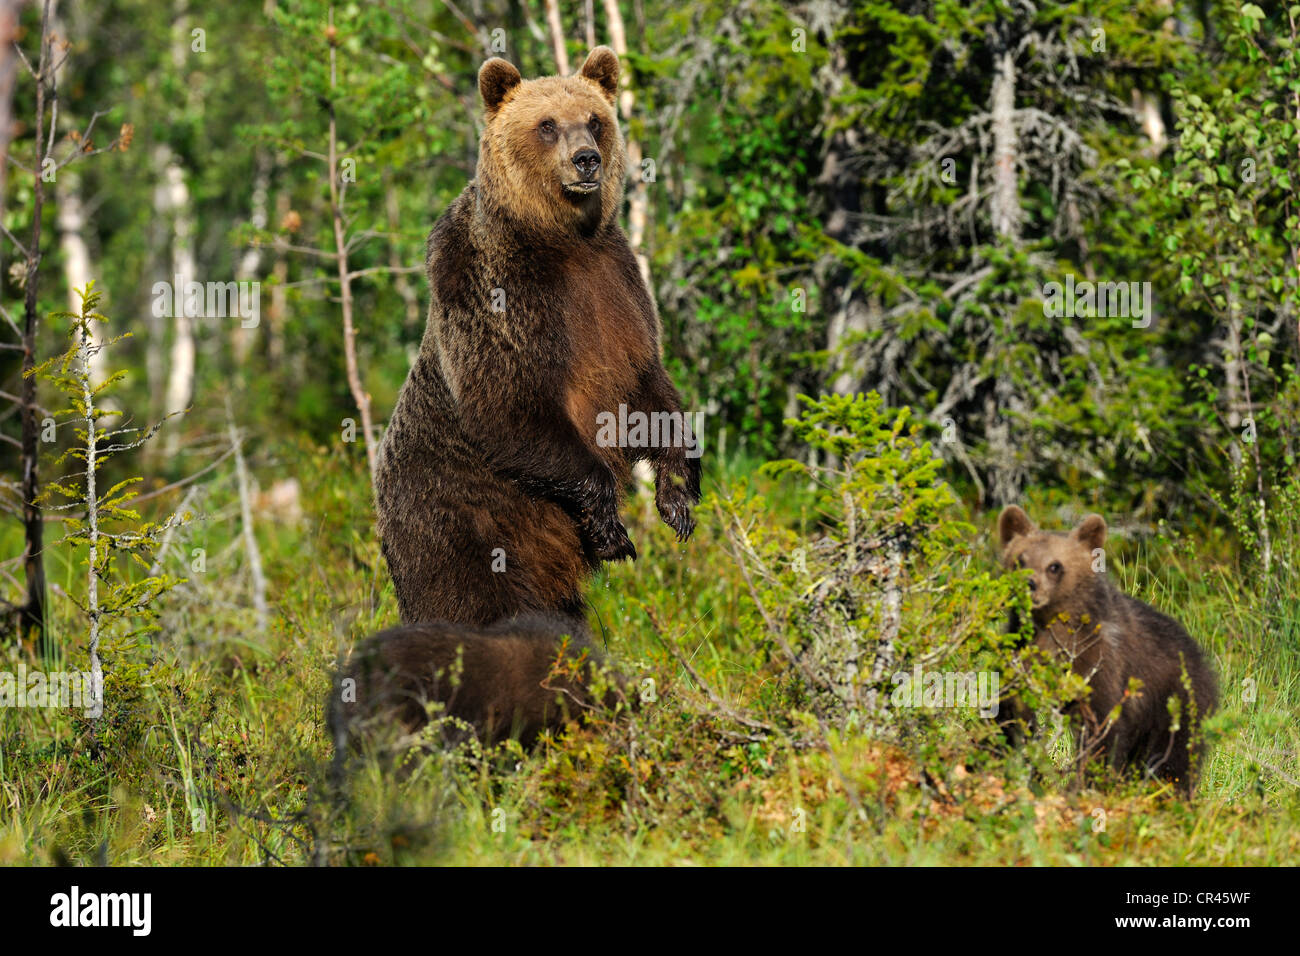 Brown bears (Ursus arctos), female with cubs, keeping watch, Martinselkonen, Karelia, eastern Finland, Finland, Europe Stock Photo